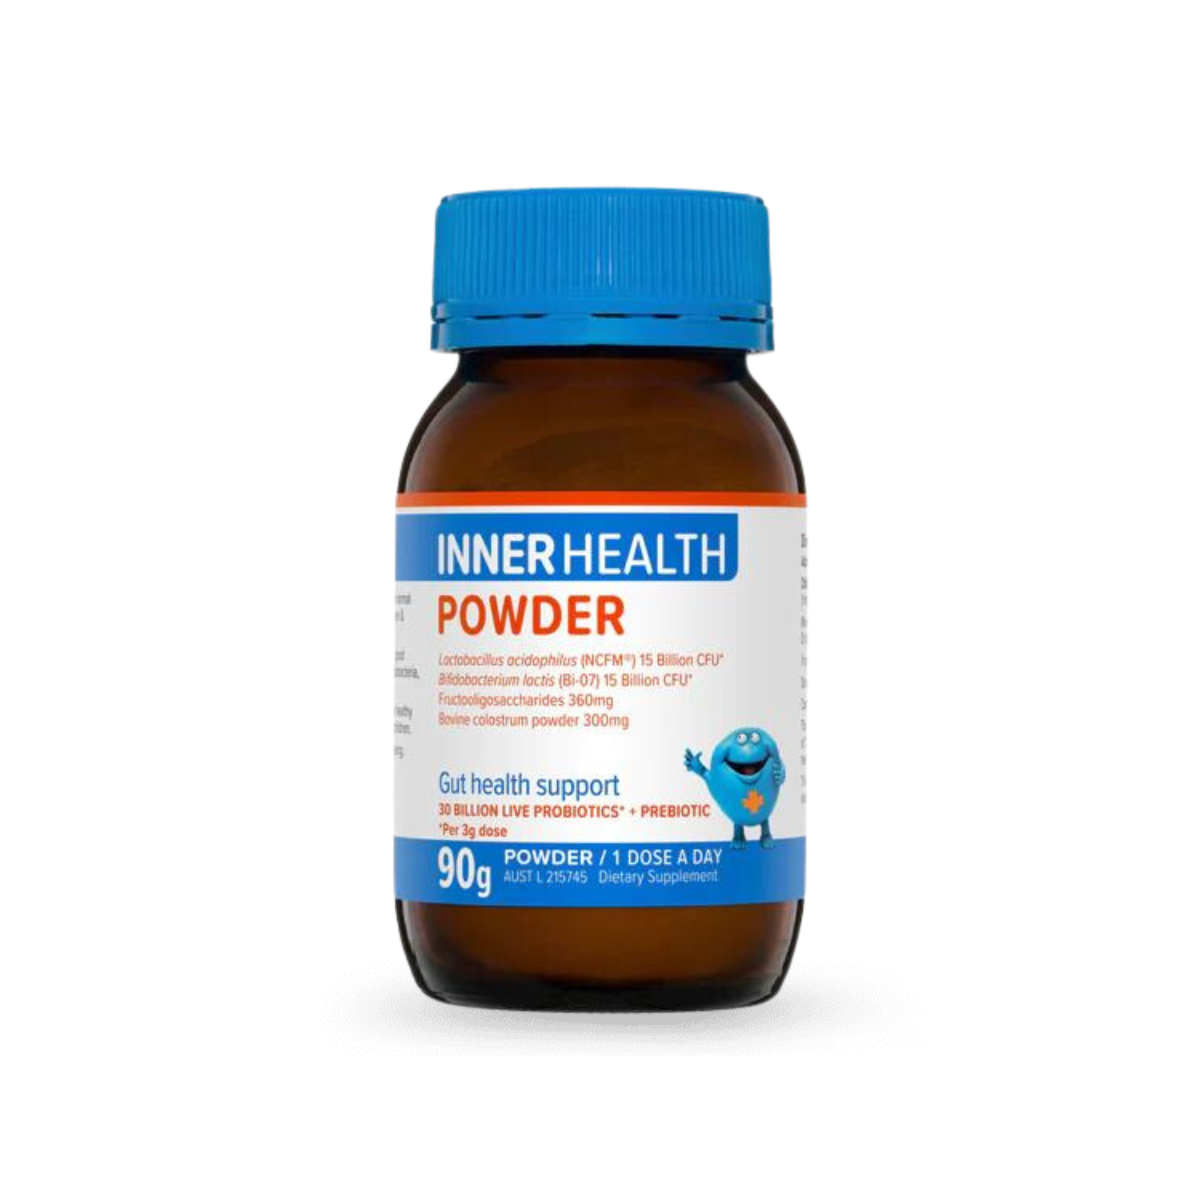 Inner Health Powder Probiotic 90g❄